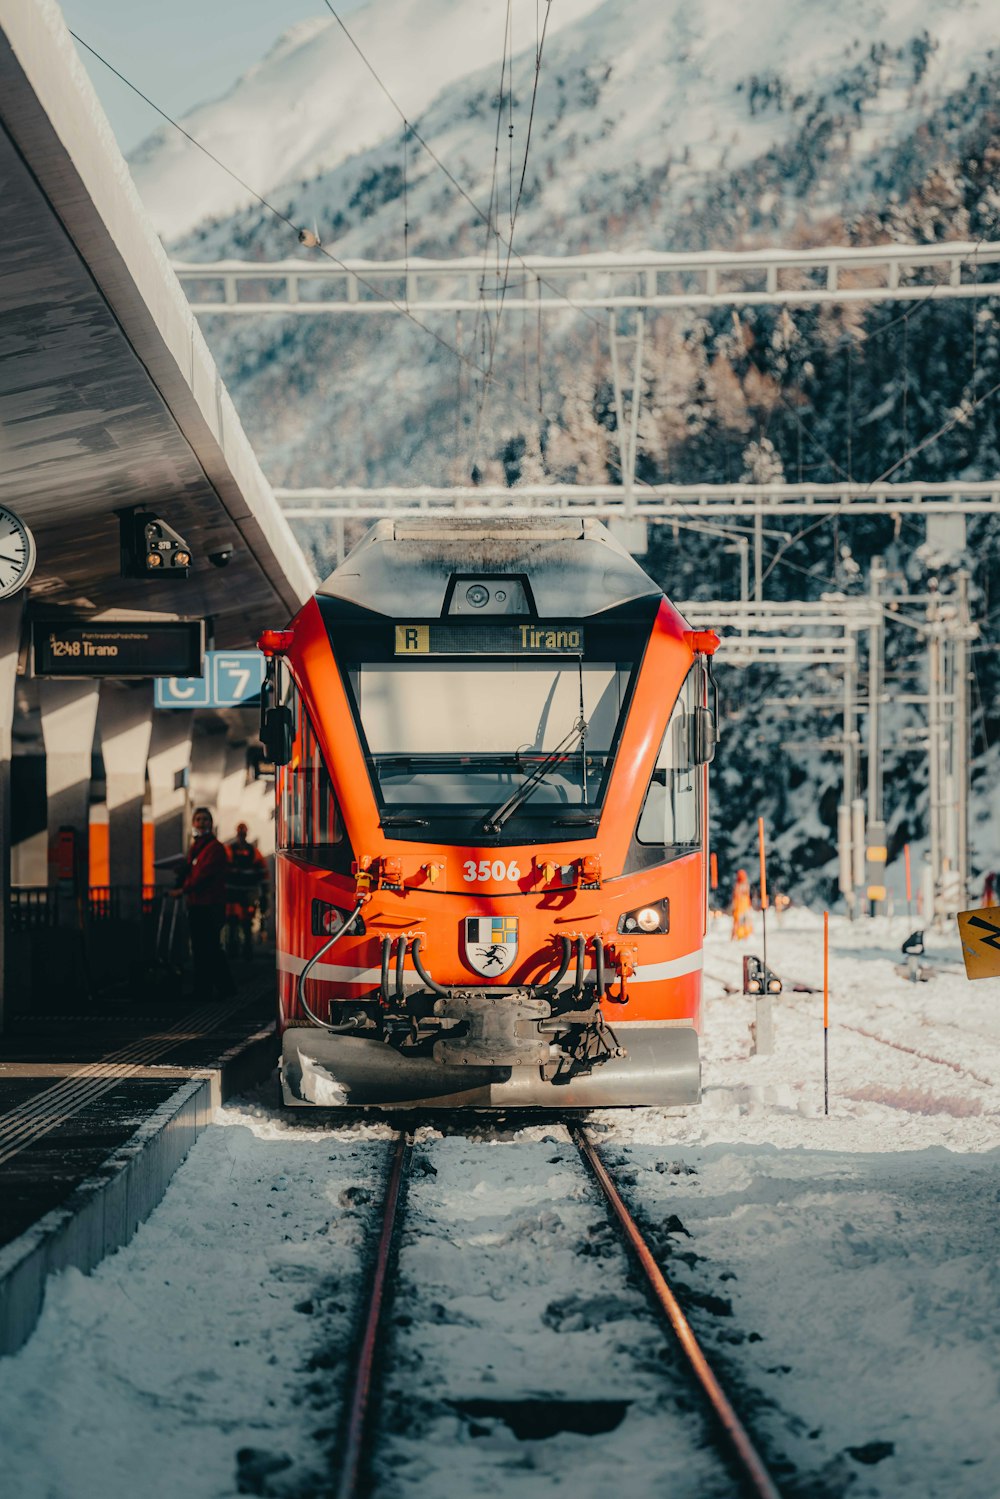 an orange train pulling into a train station